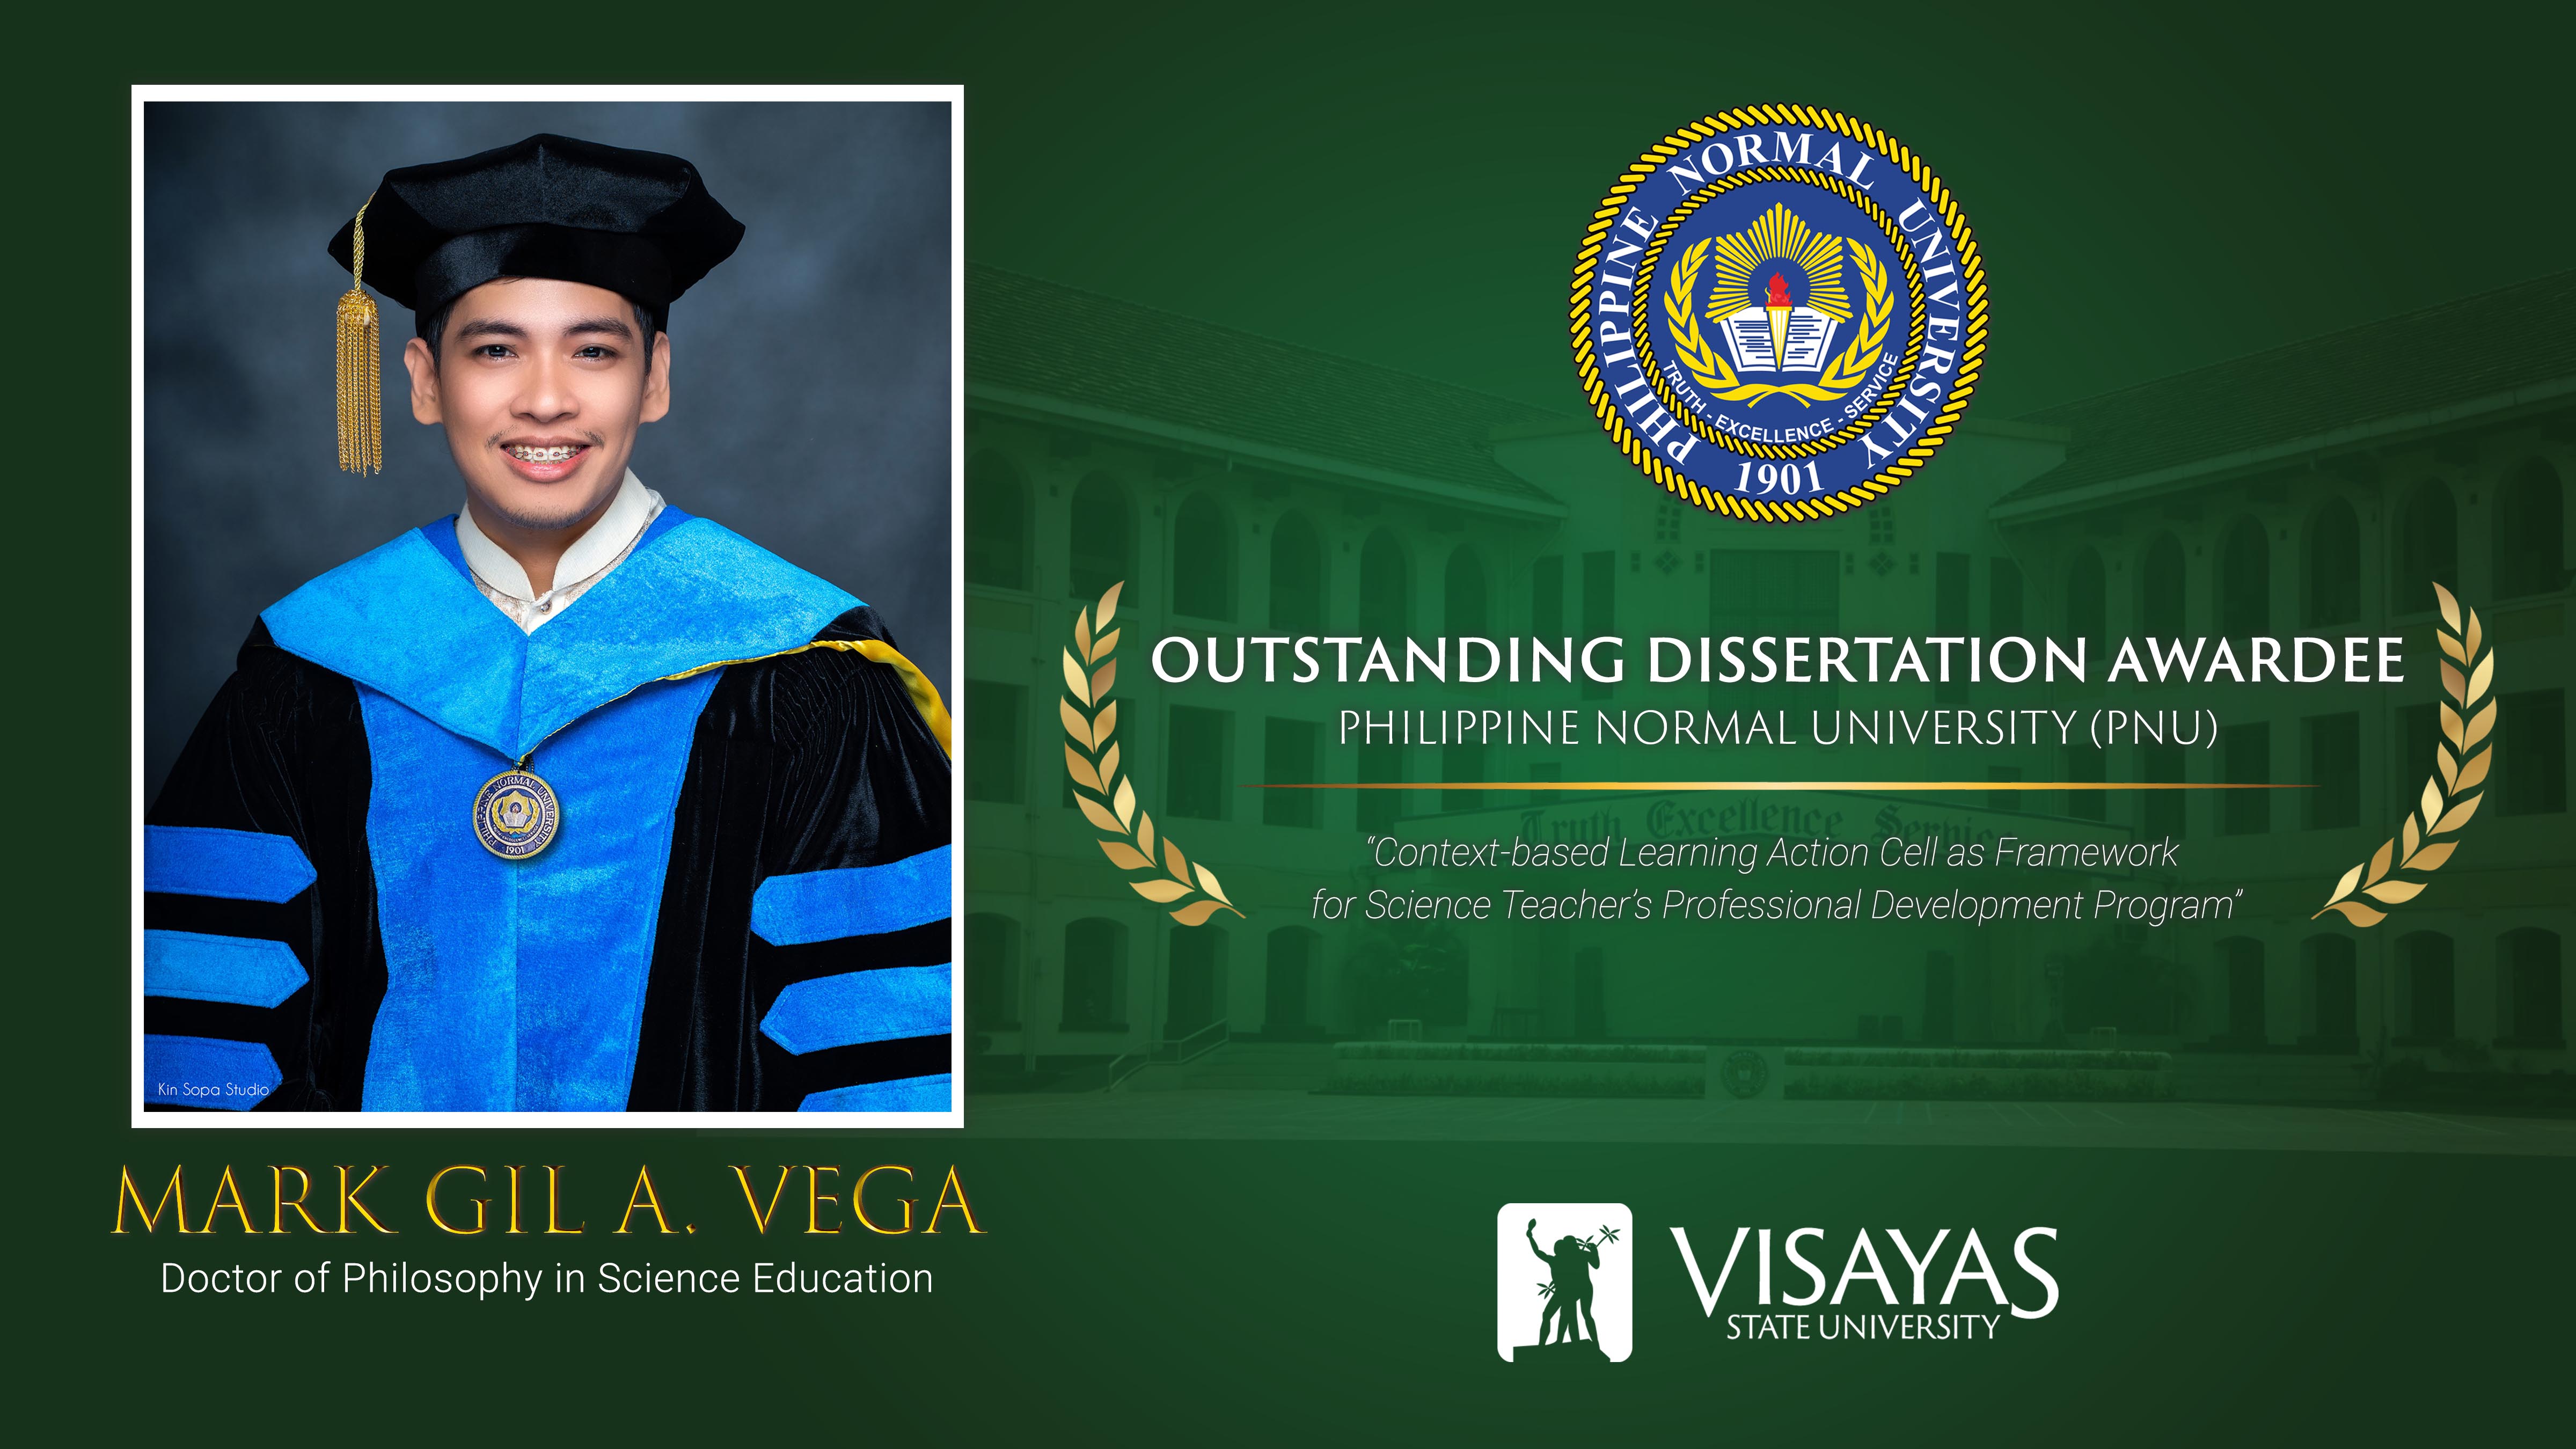 Dr. Vega